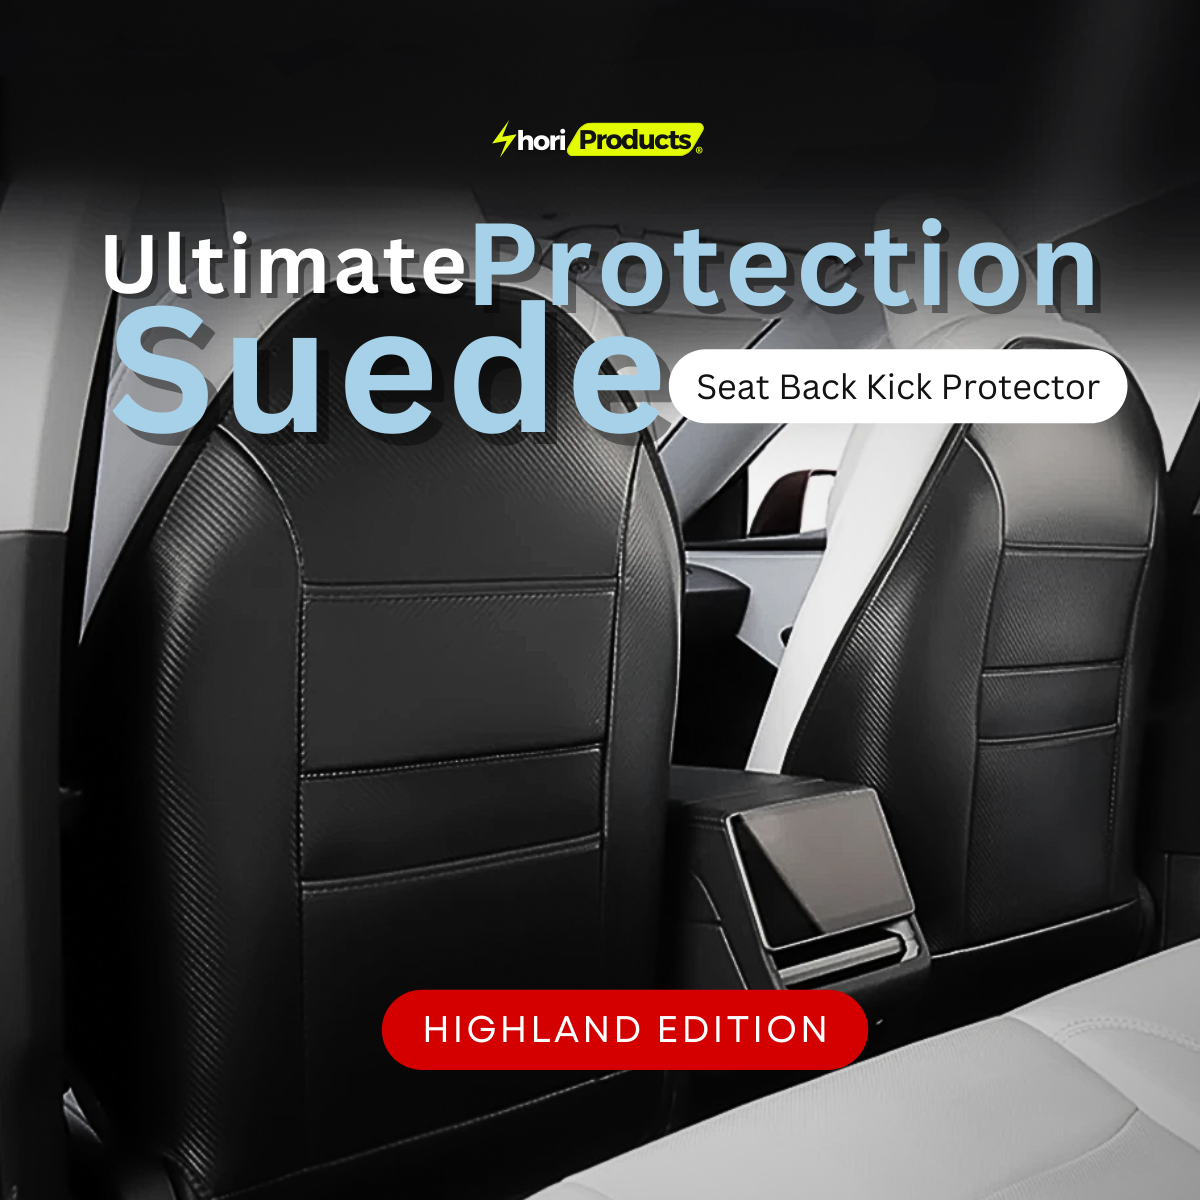 Ultimate Protection Suede Seat Back Kick Protector Tesla Model 3 Highland